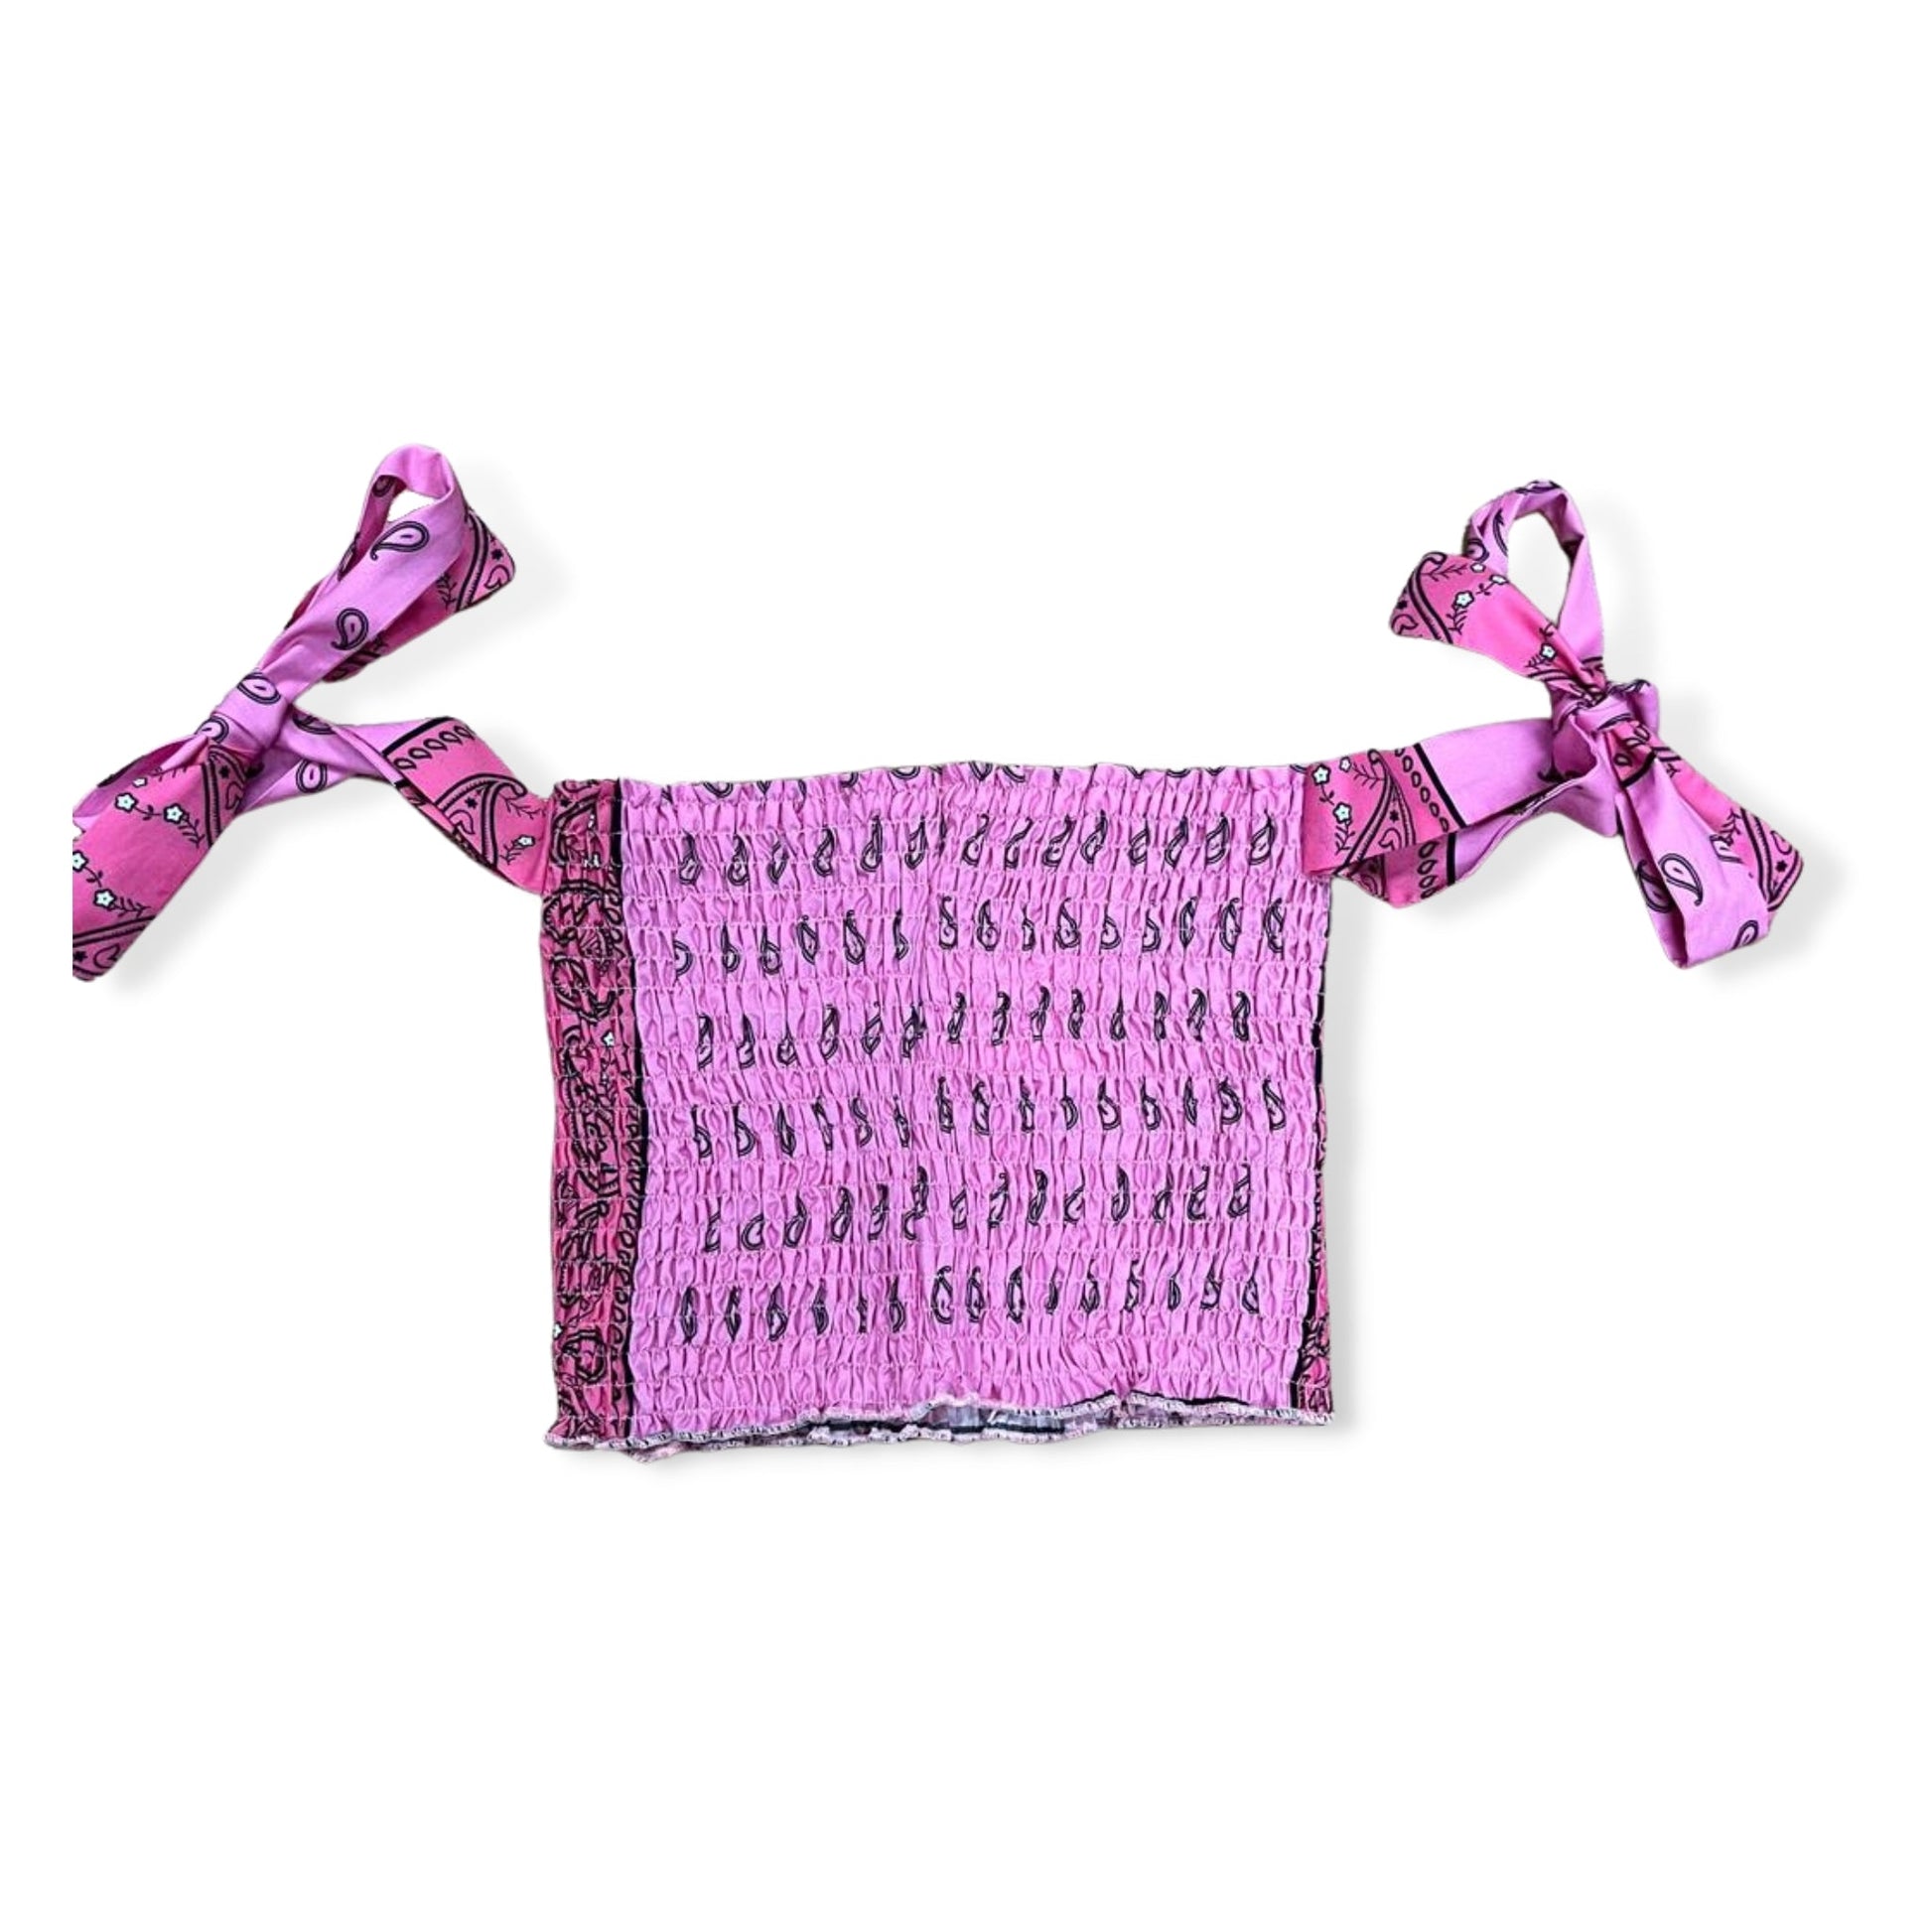 Theme Pink Bandana - The Jessie Smocked Tie Strap Top - a Spirit Animal - Tops $60-$90 active Dec 2022 Apparel